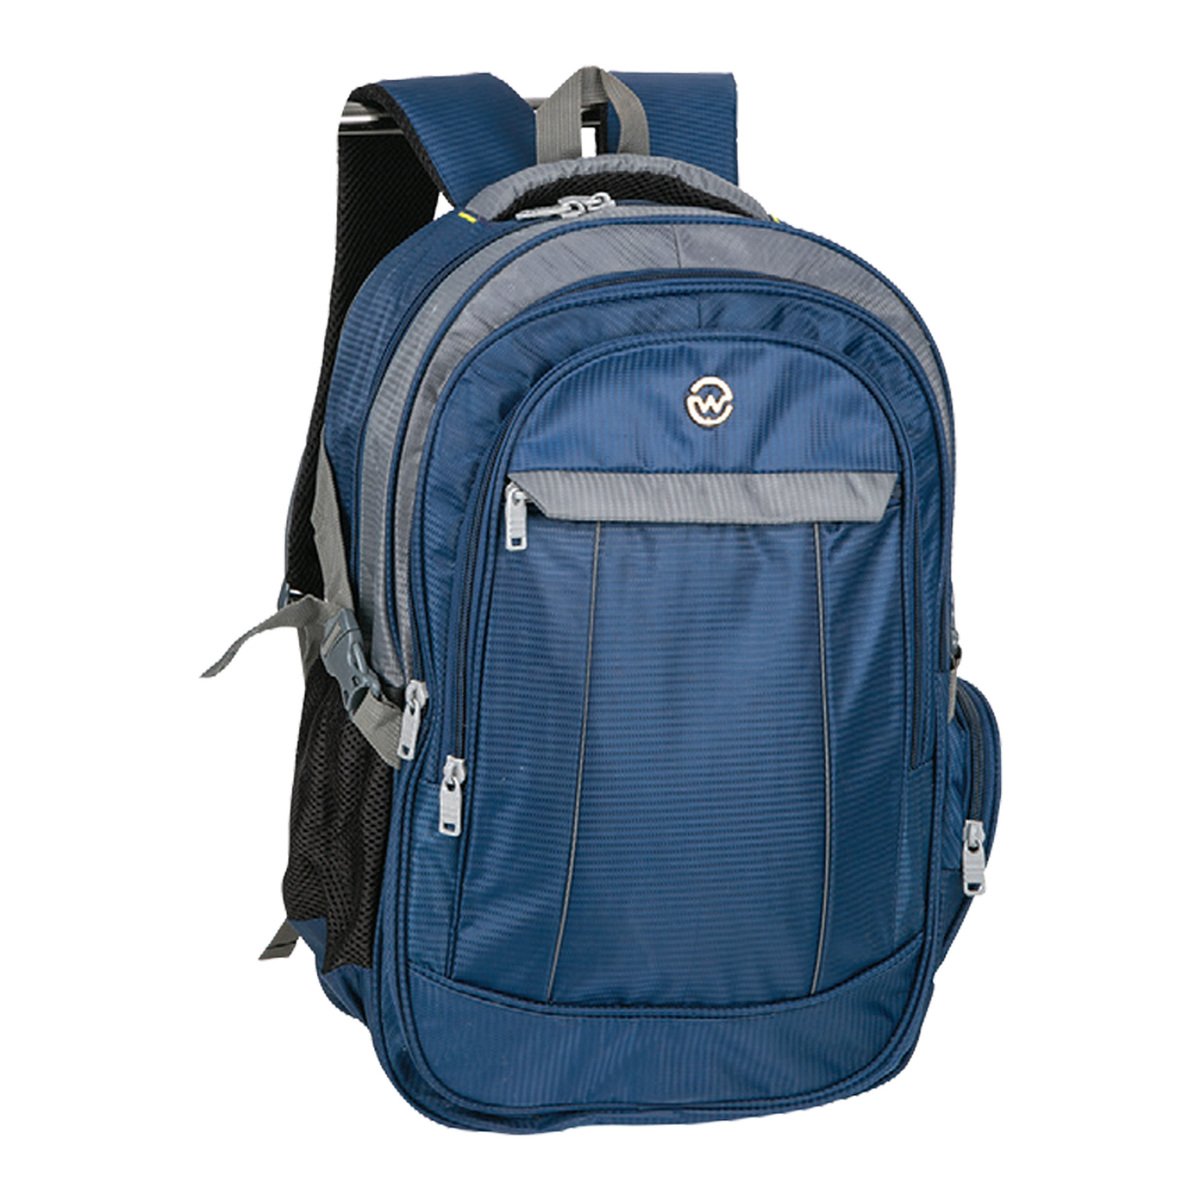 Wagon-R Vibrant Backpack 8004 19"